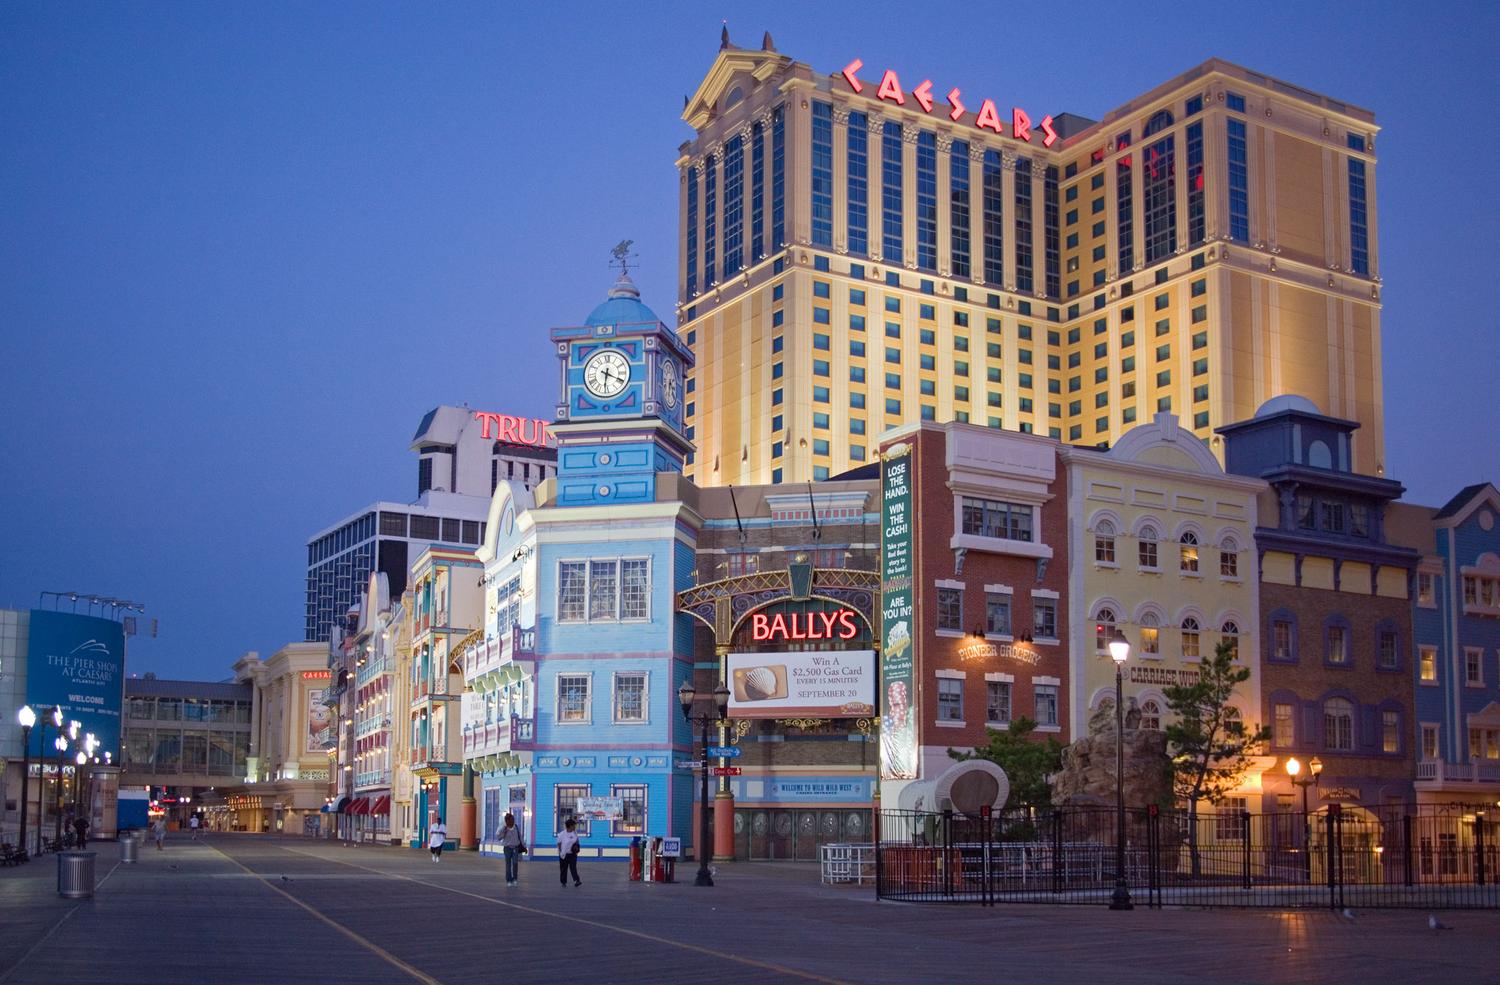 atlantic city casinos open